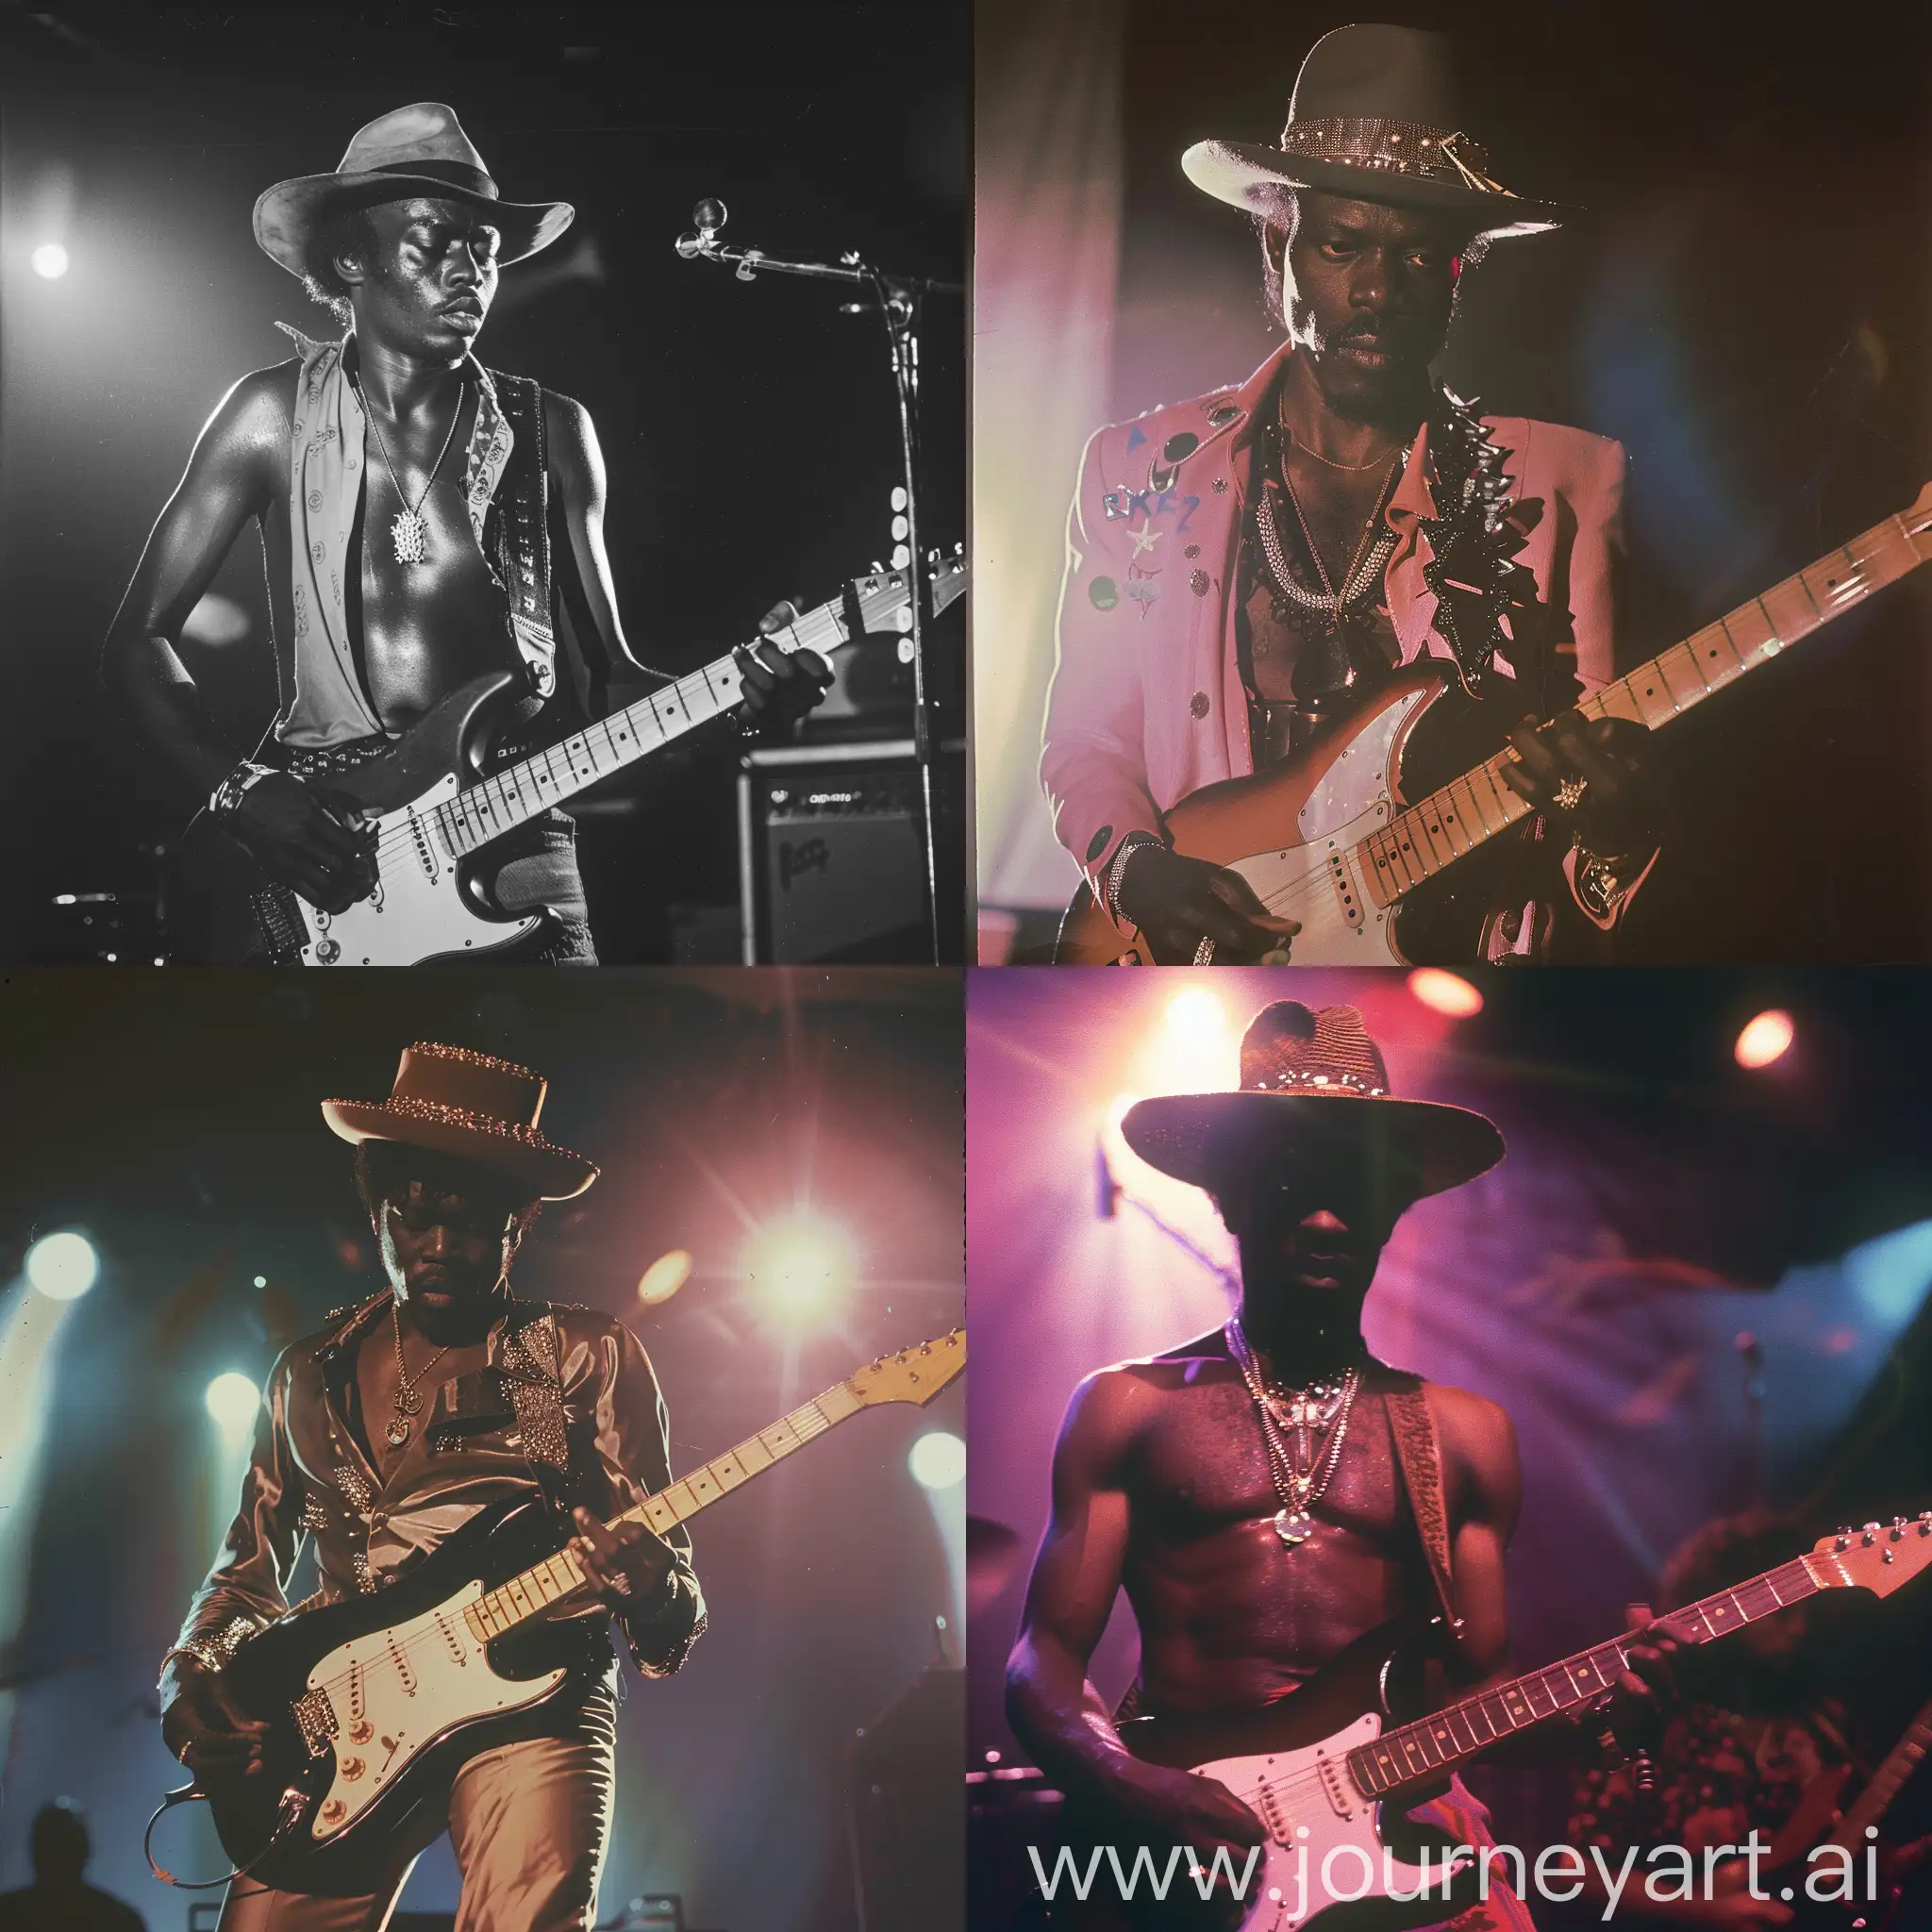 Black-Man-Playing-Hardrock-Guitar-Backstage-in-1980s-Photograph